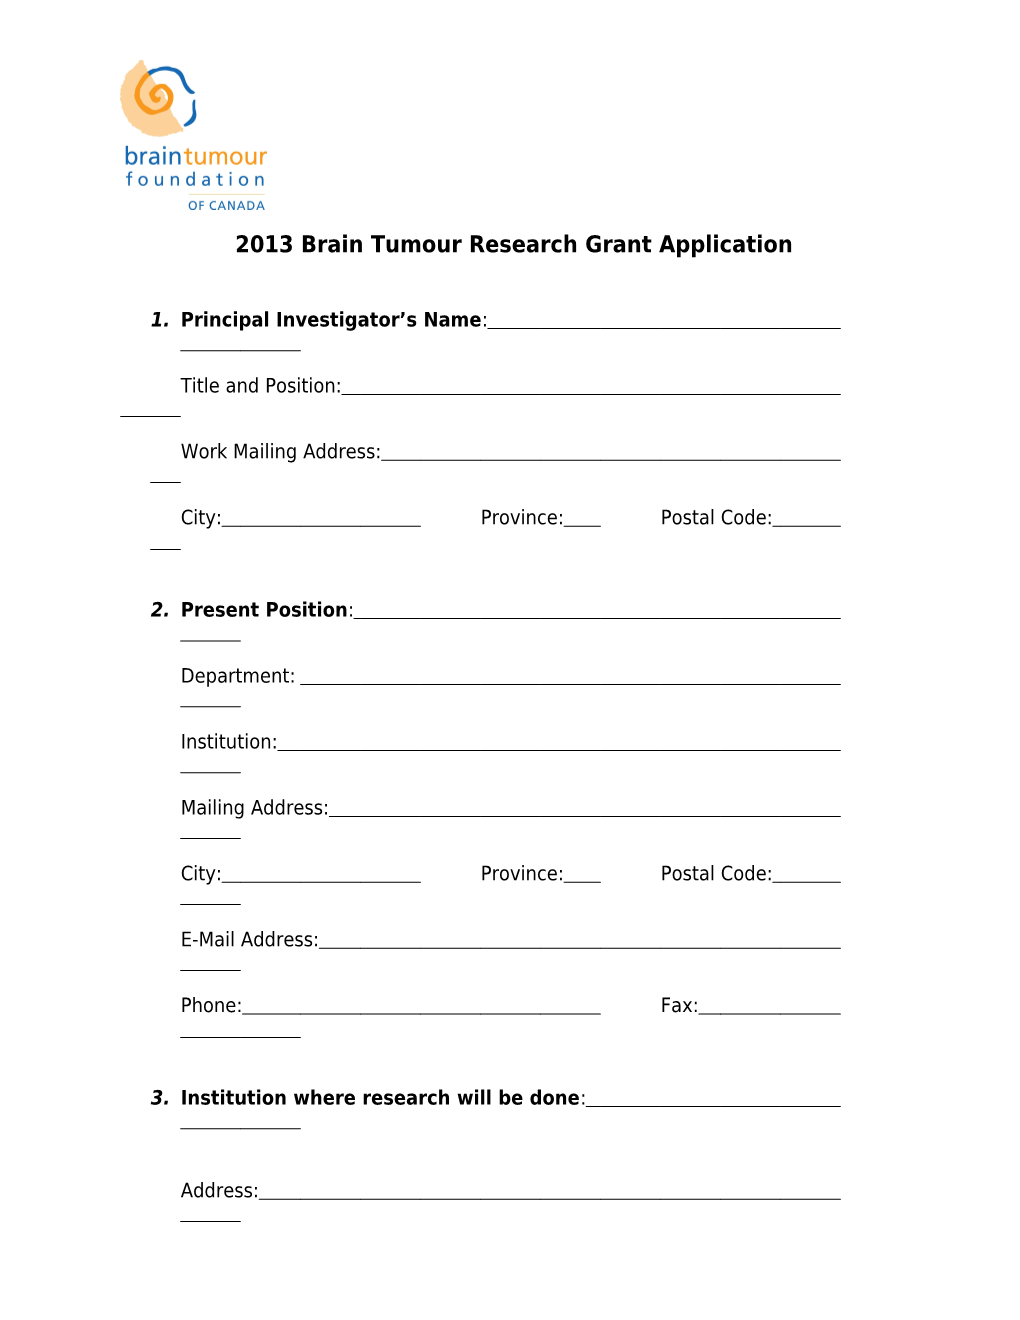 2013Brain Tumour Research Grant Application Form: Brain Tumour Foundation of Canada